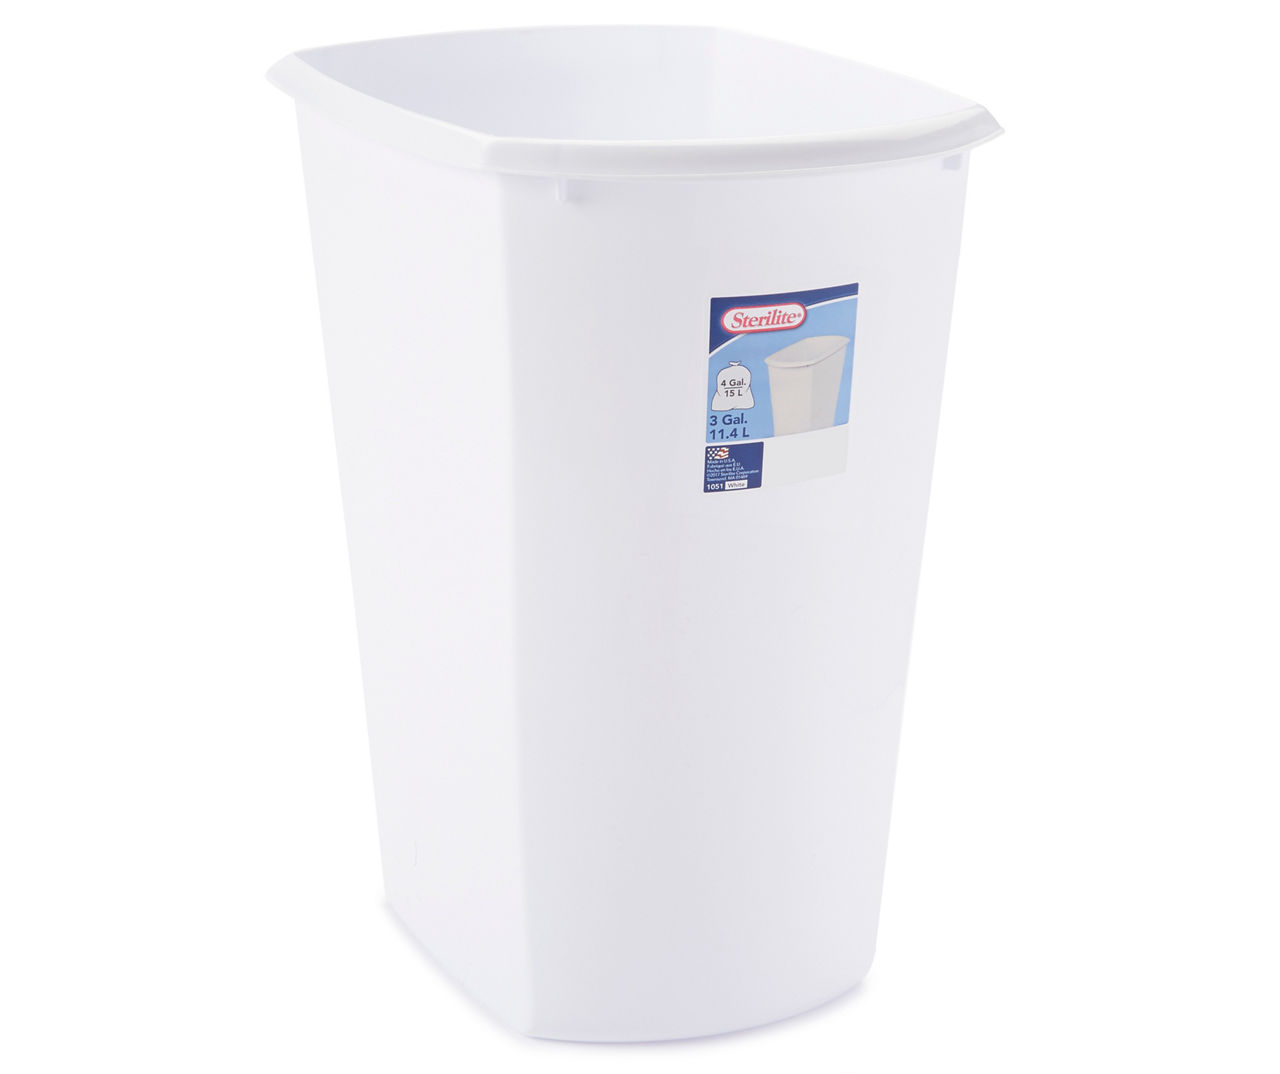 Sterilite White 3 Gallon Wastebasket with Grey Handles 